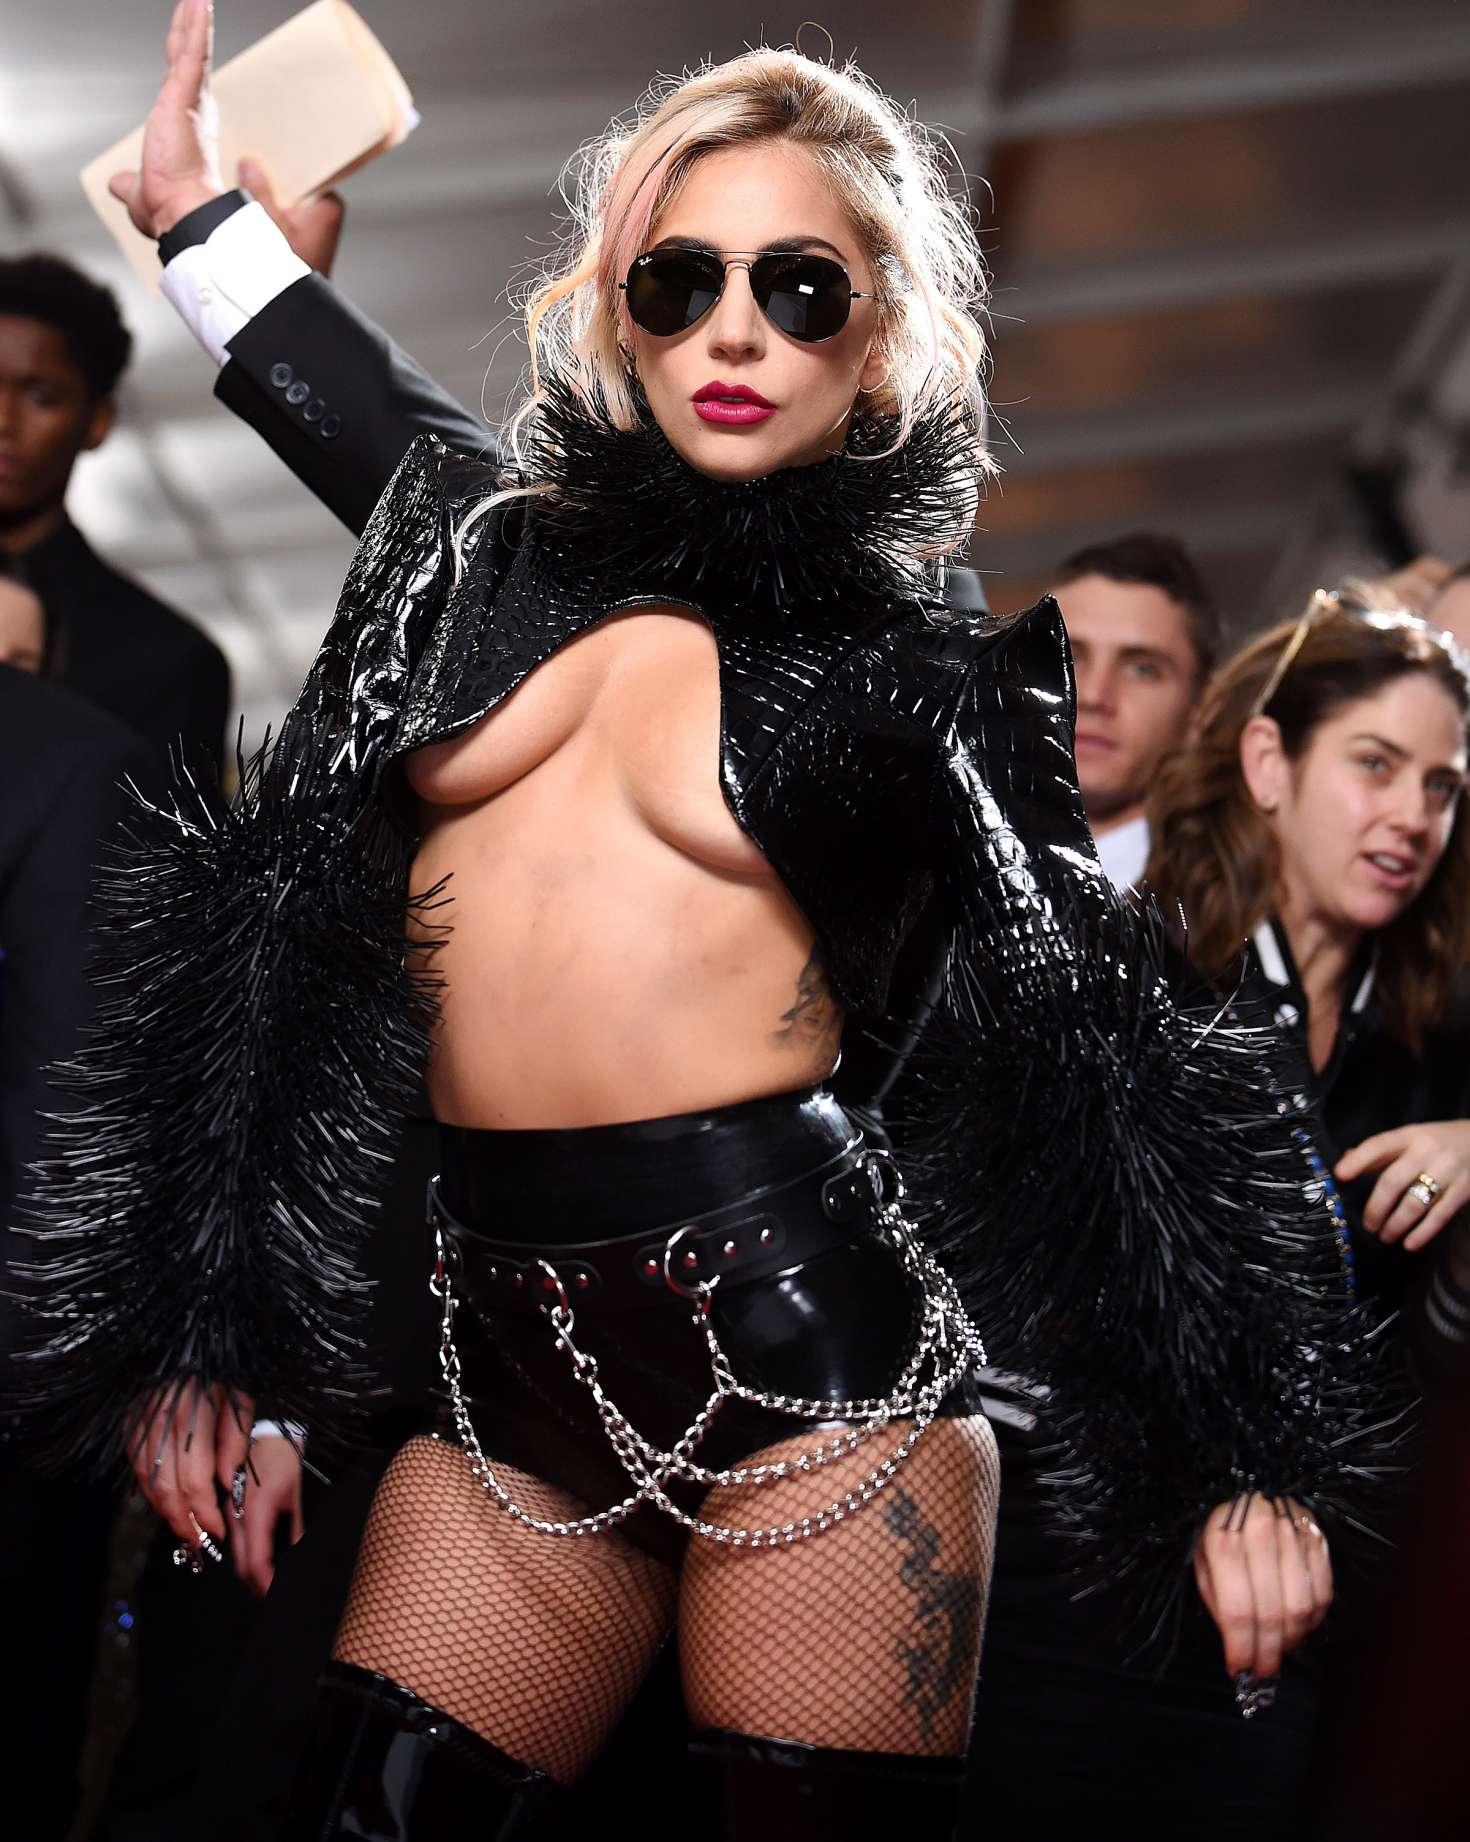 Lady Gaga Displays Extreme Sideboob In Amsterdam